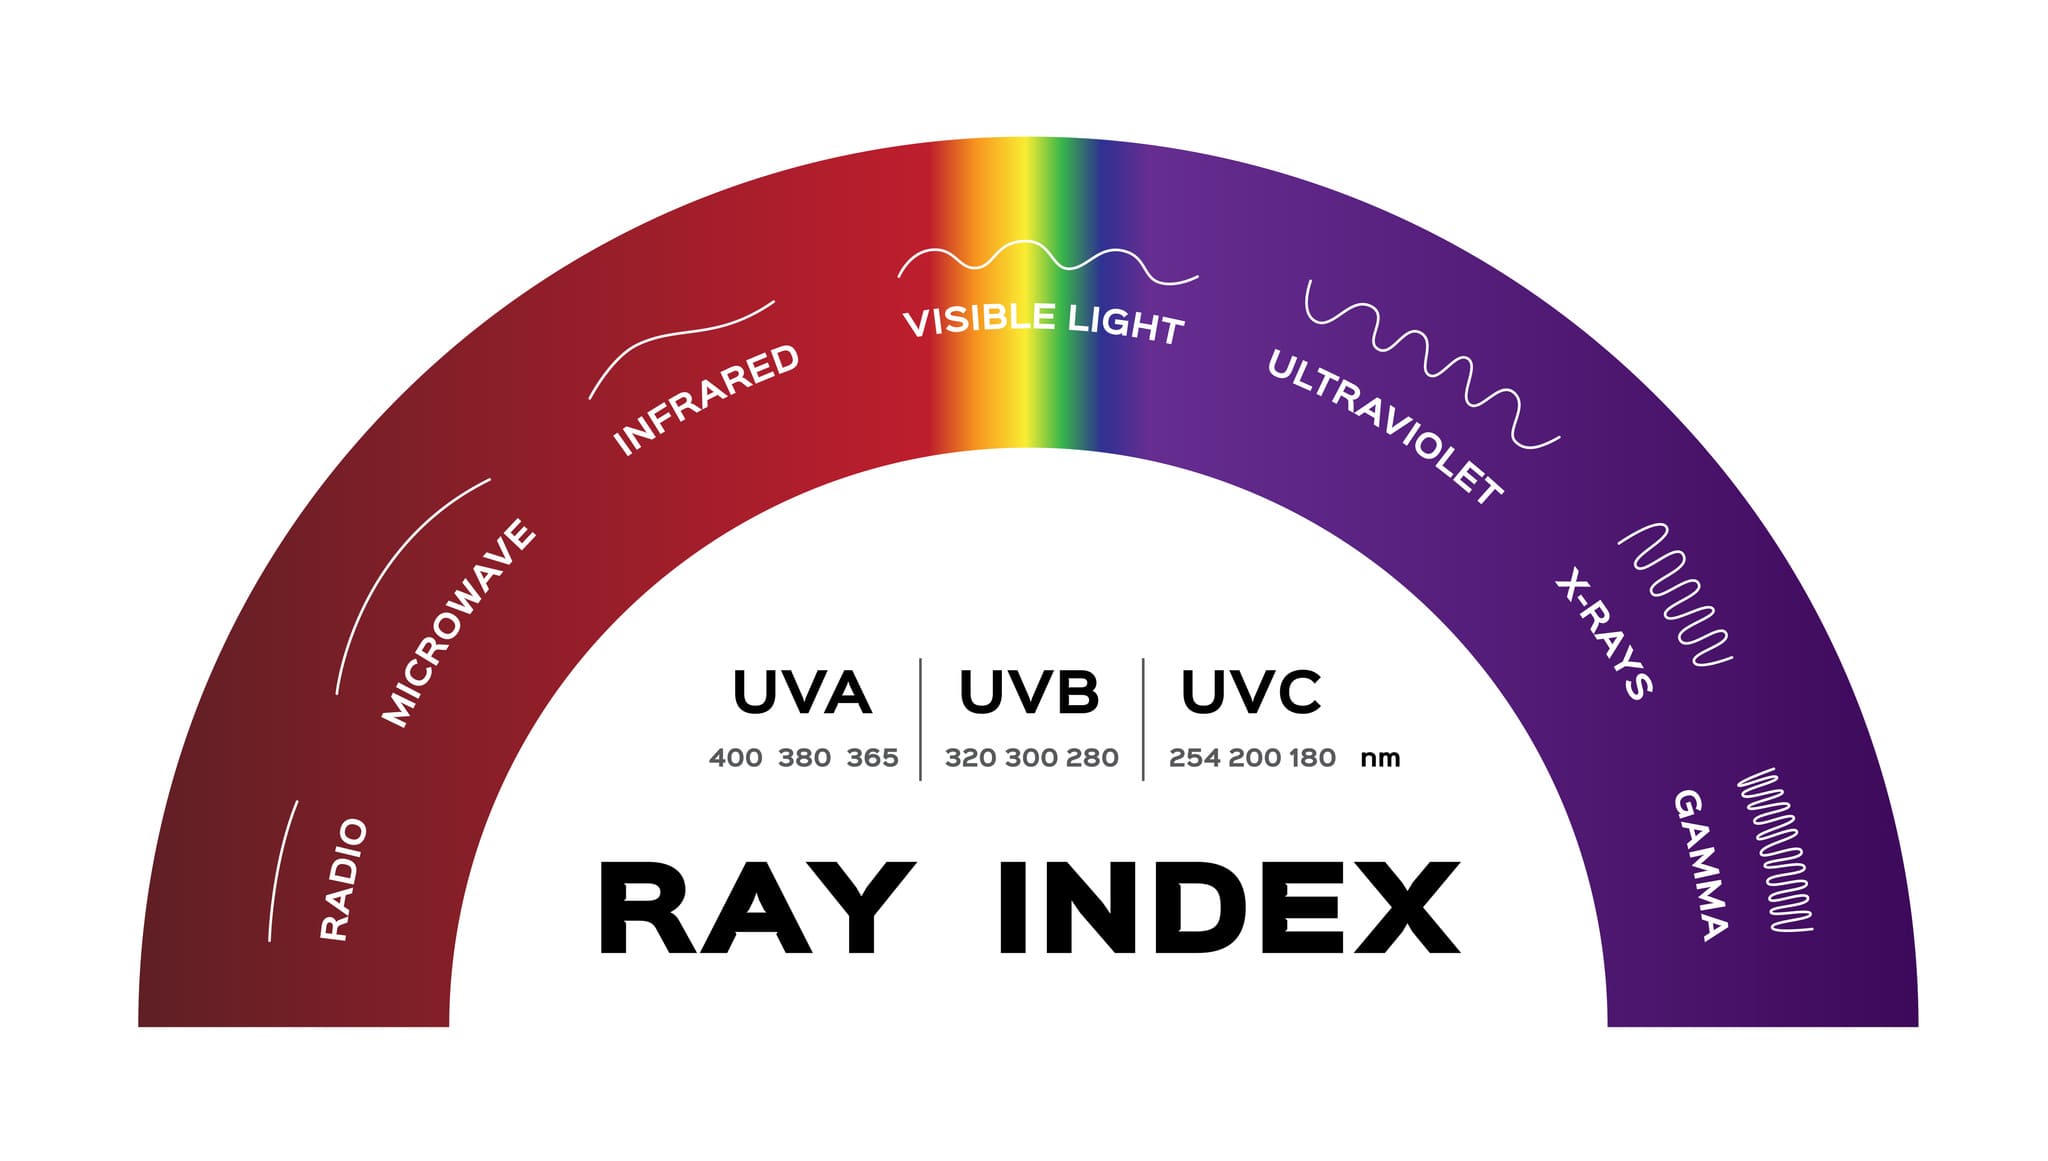 UV ray index